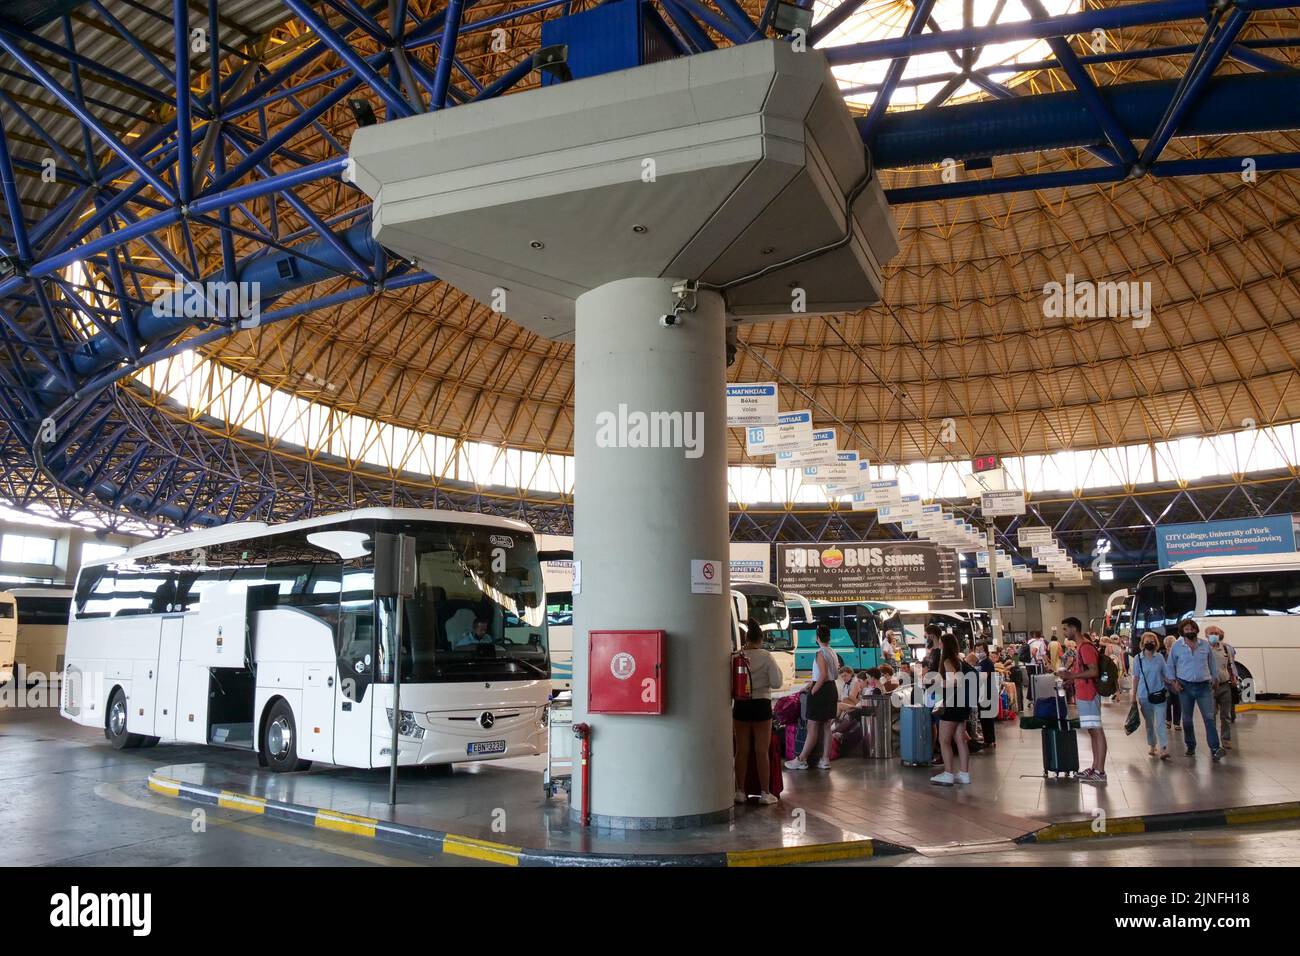 Ktel Makedonia Bus Station, Thessaloniki, Macedonia, North-Eastern Greece Stock Photo